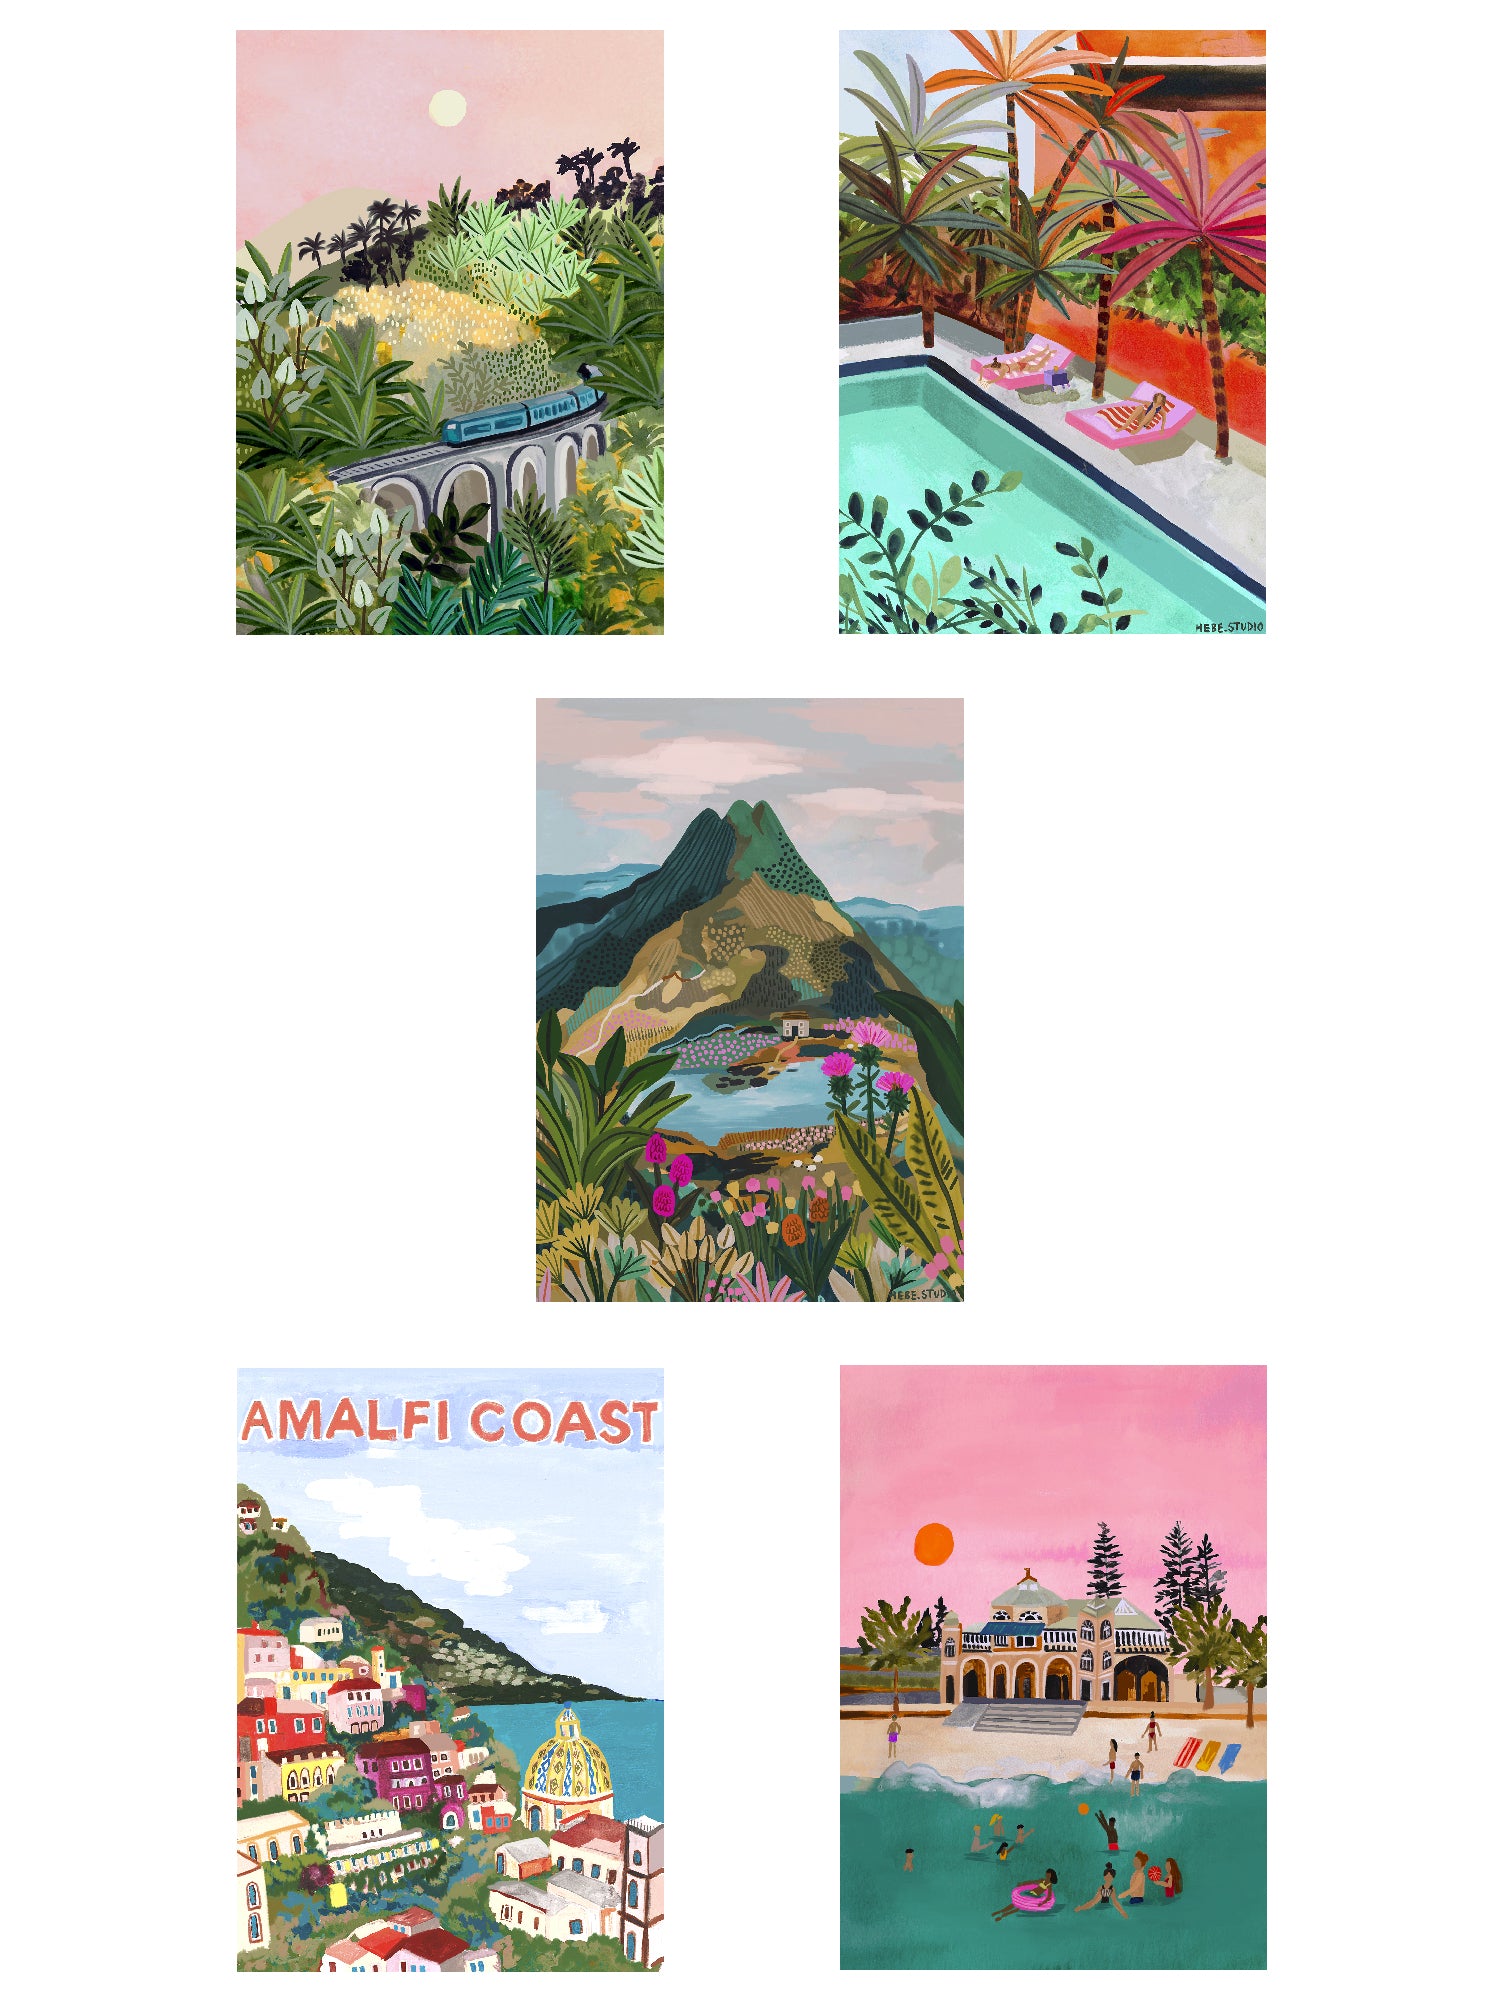 The Exotic Travels Postcard set